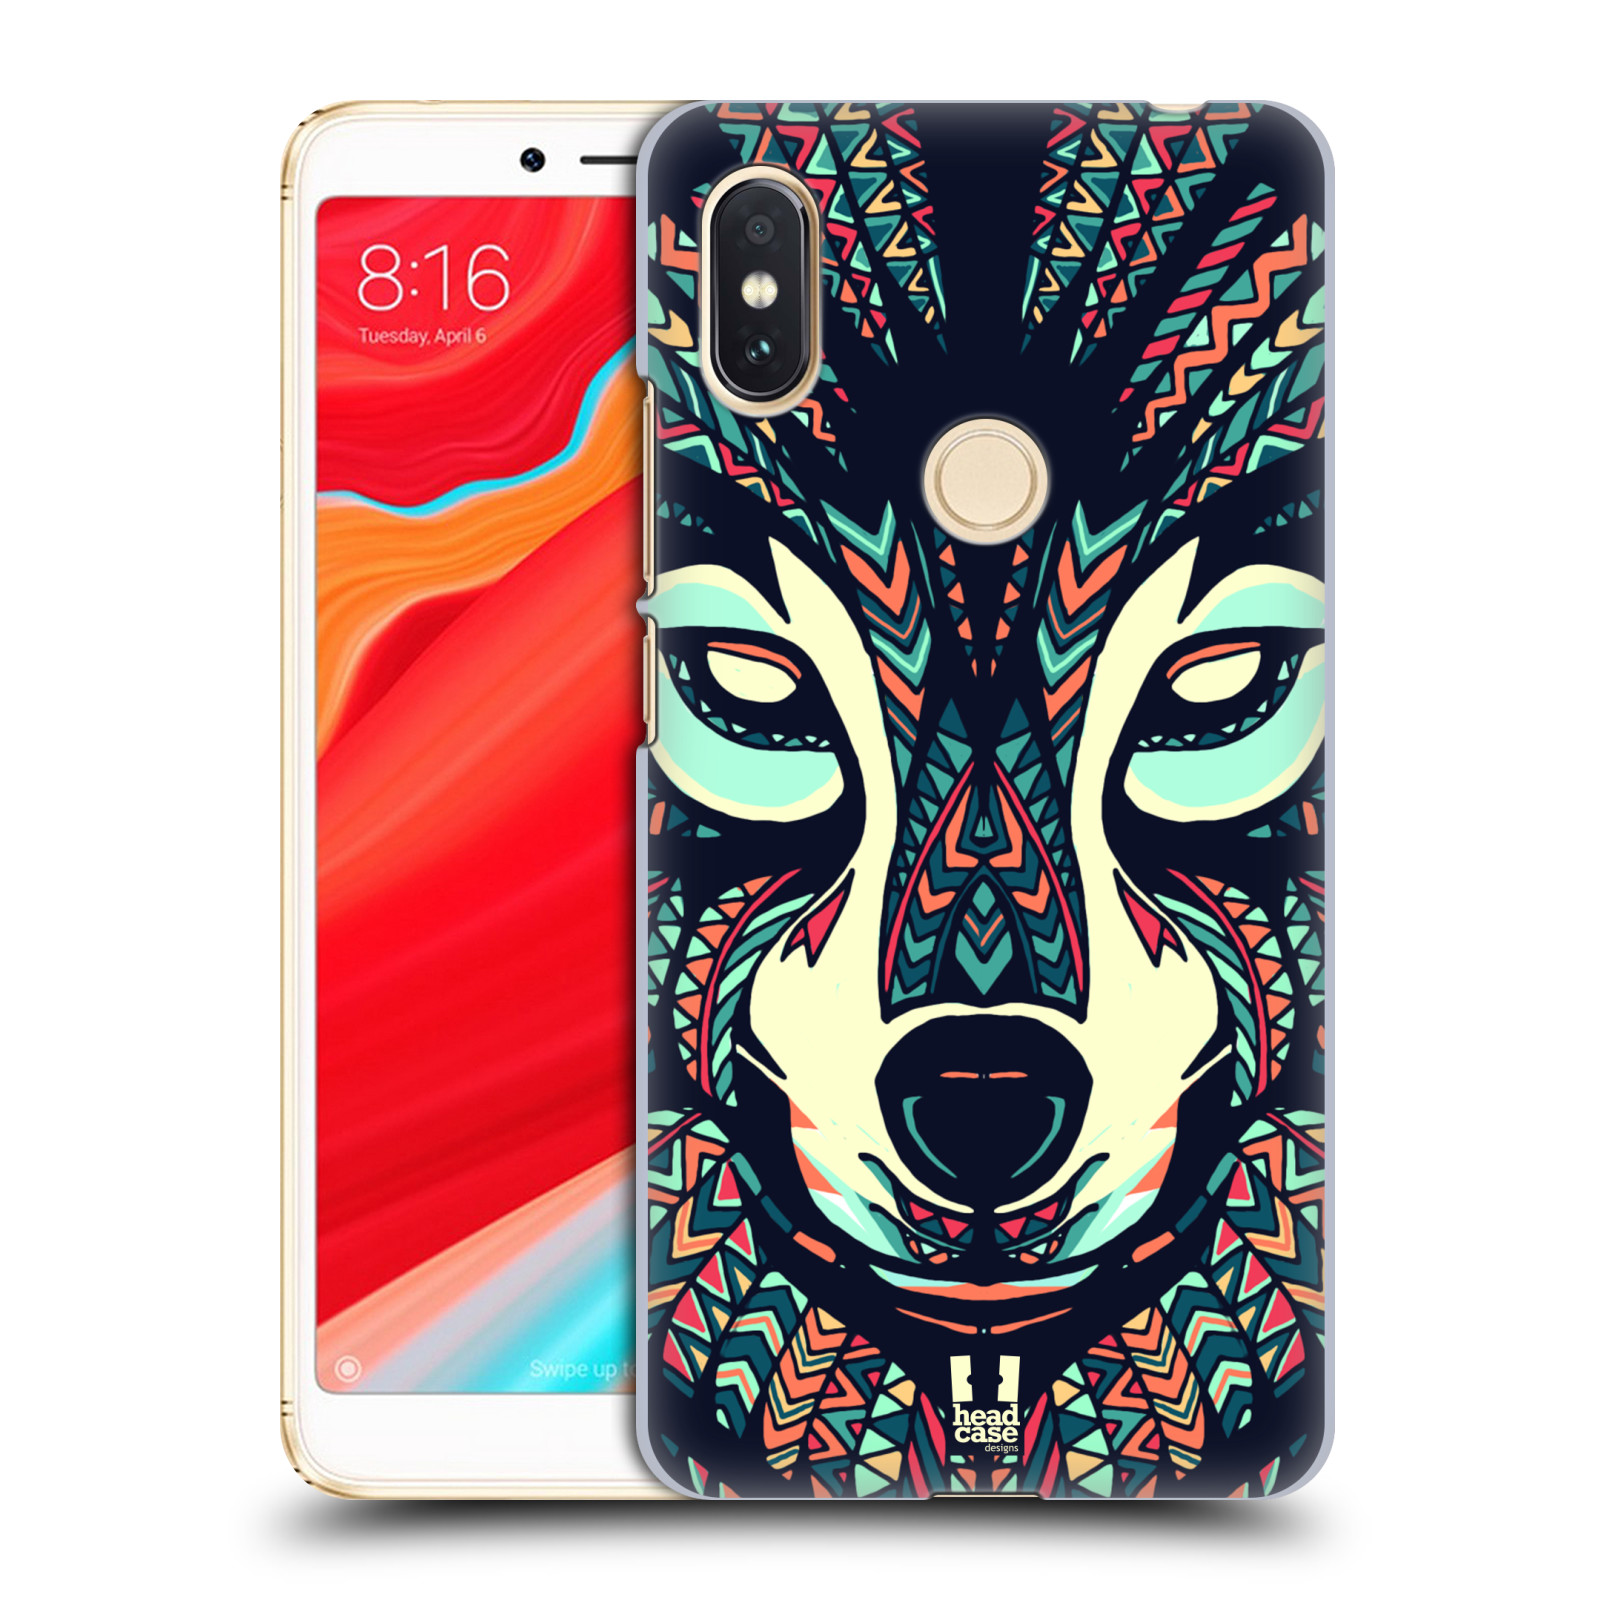 HEAD CASE plastový obal na mobil Xiaomi Redmi S2 vzor Aztécký motiv zvíře 3 vlk